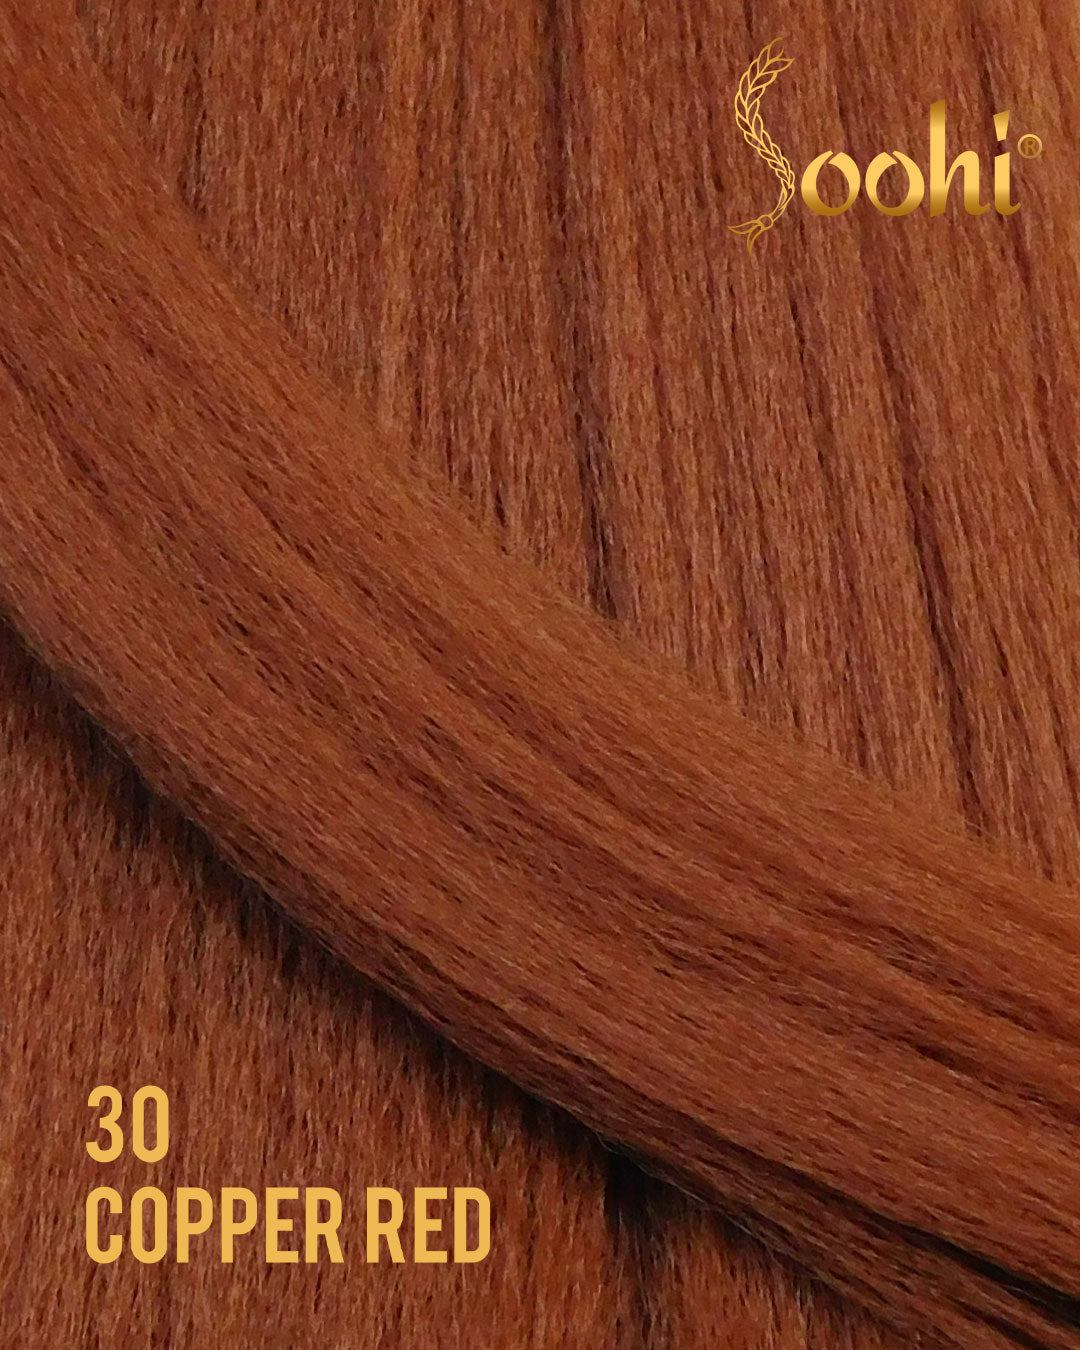 Copper Red #30 - 24